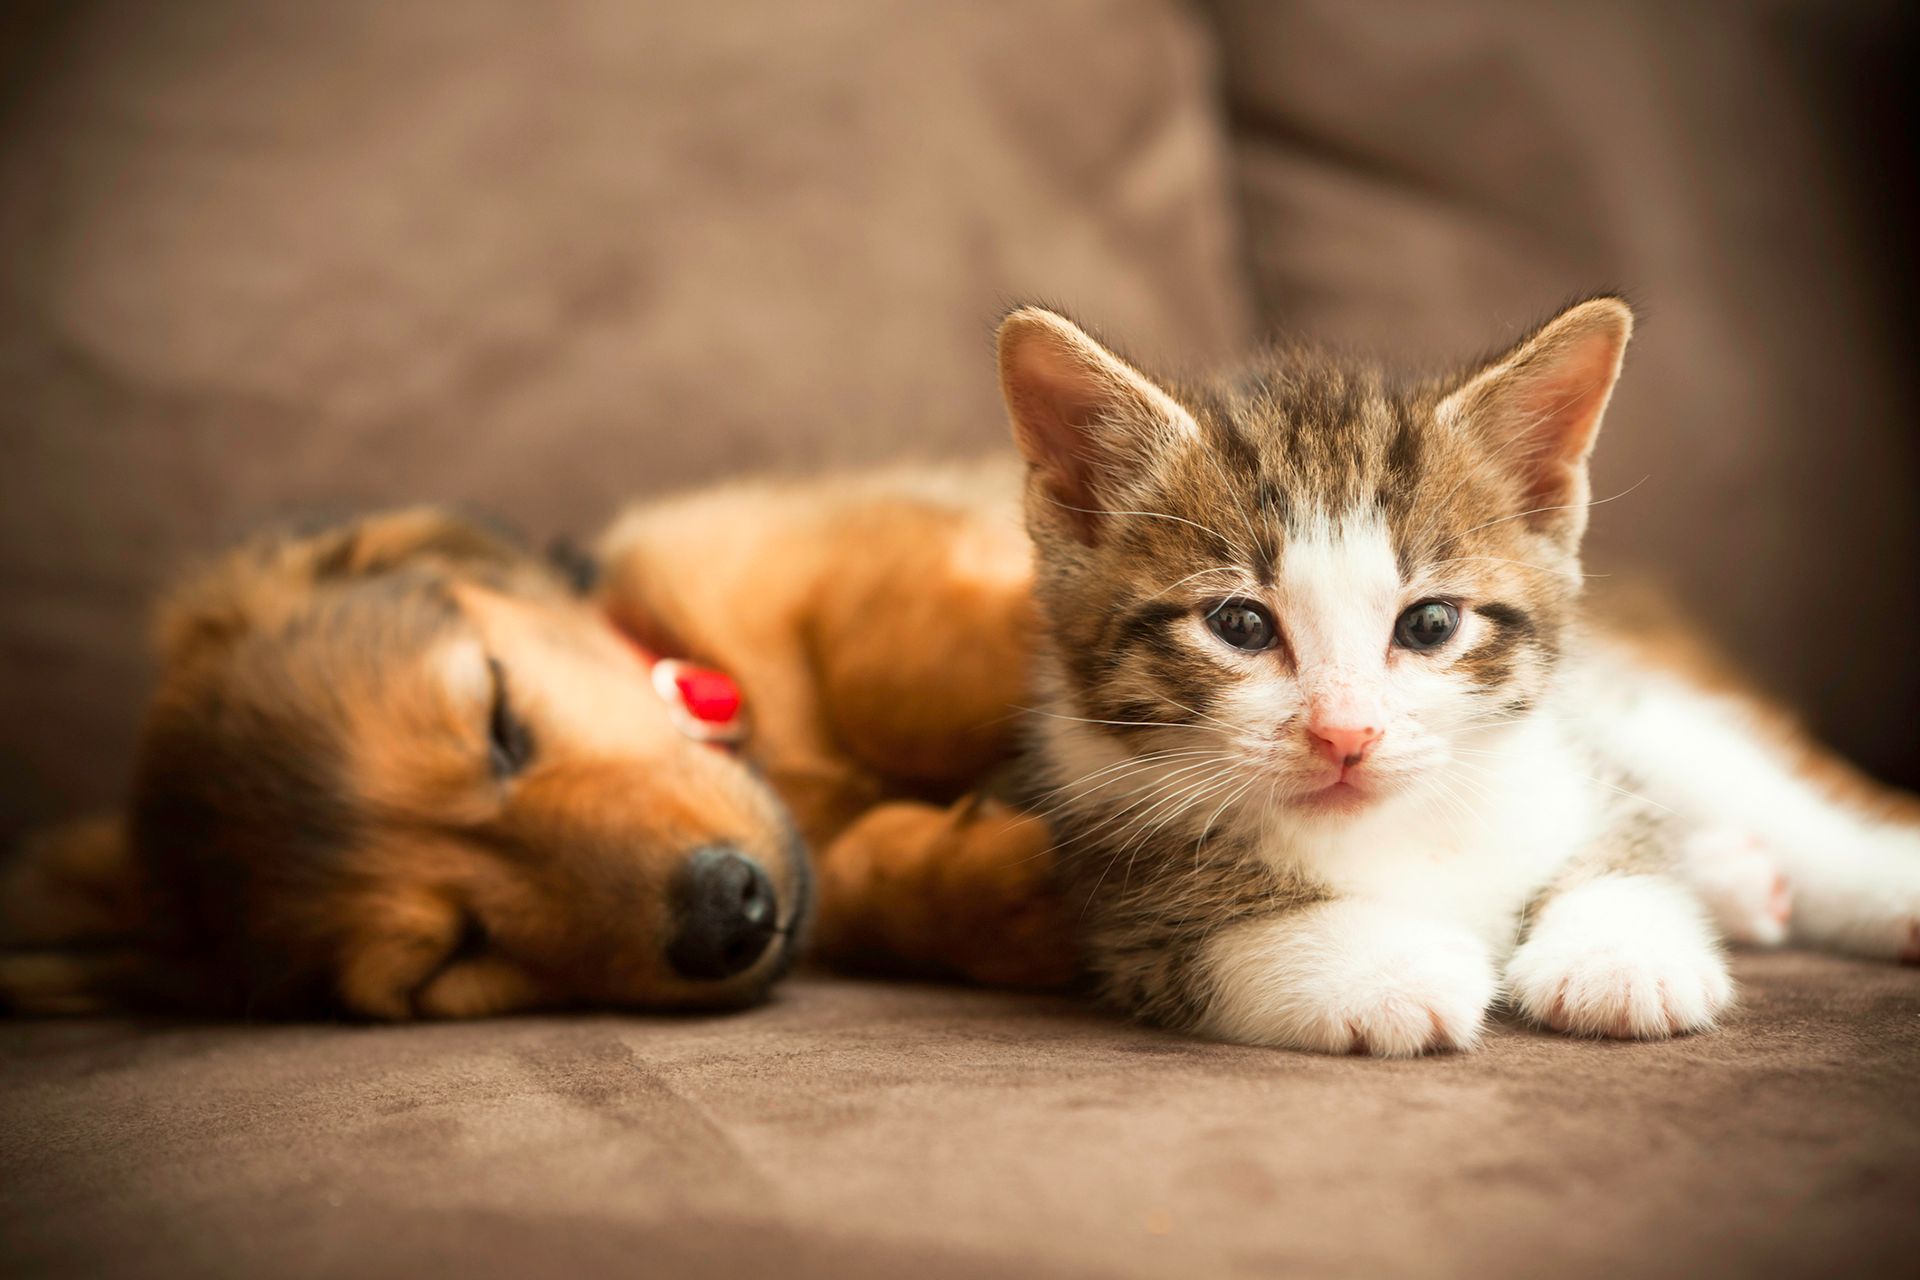 Pet insurance puppy and kitten